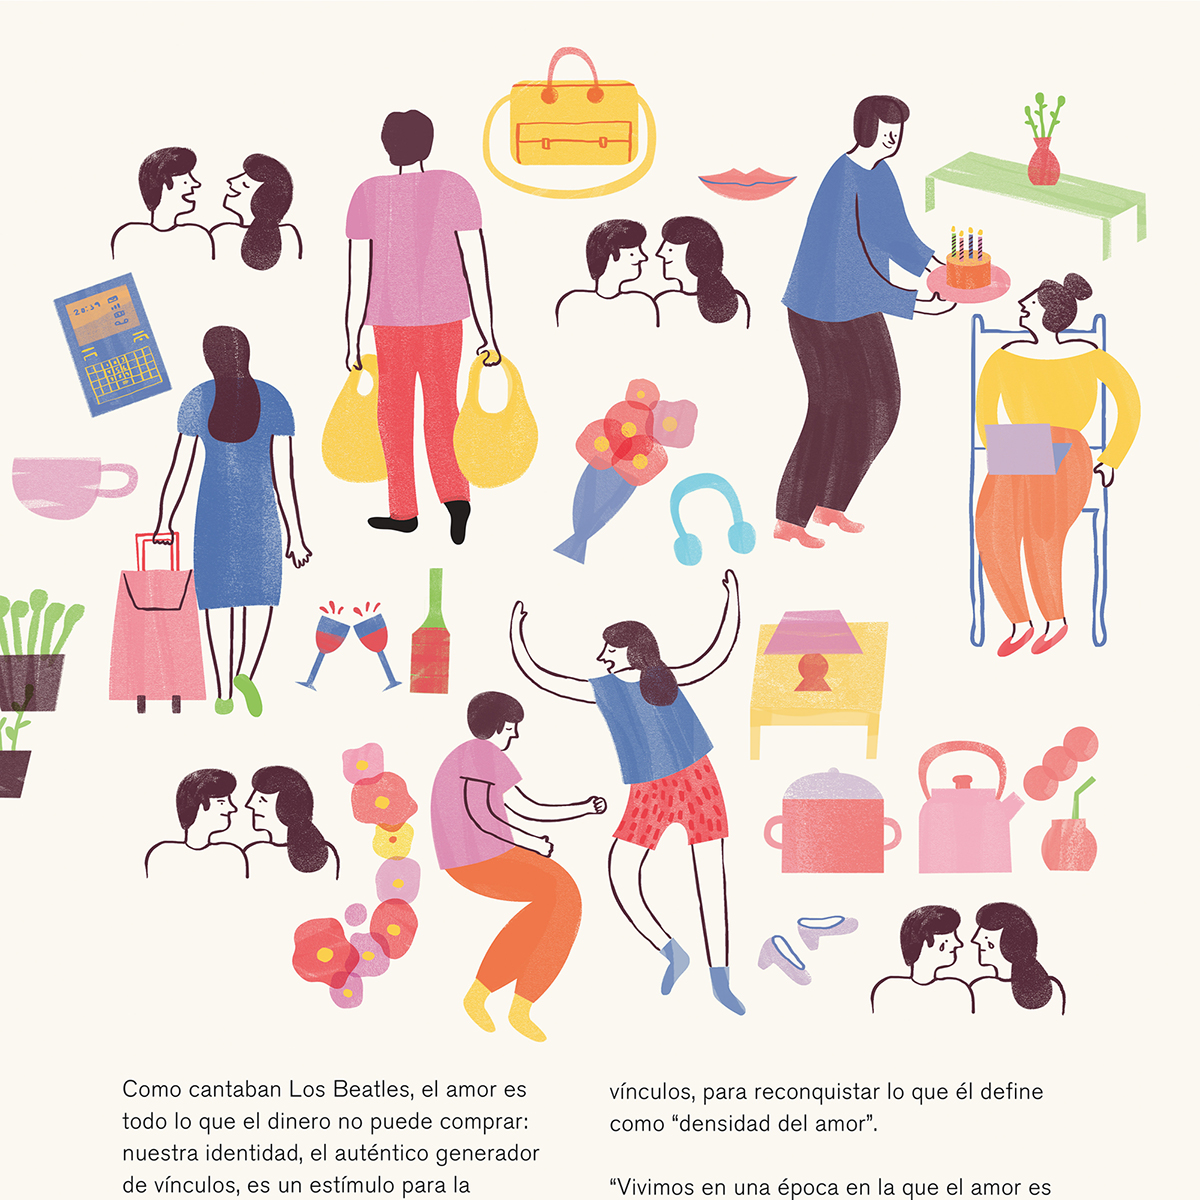 couple marriage lifestyle illustration Magazine illustration Editorial Illustration romantic Love Relationships partner woman man